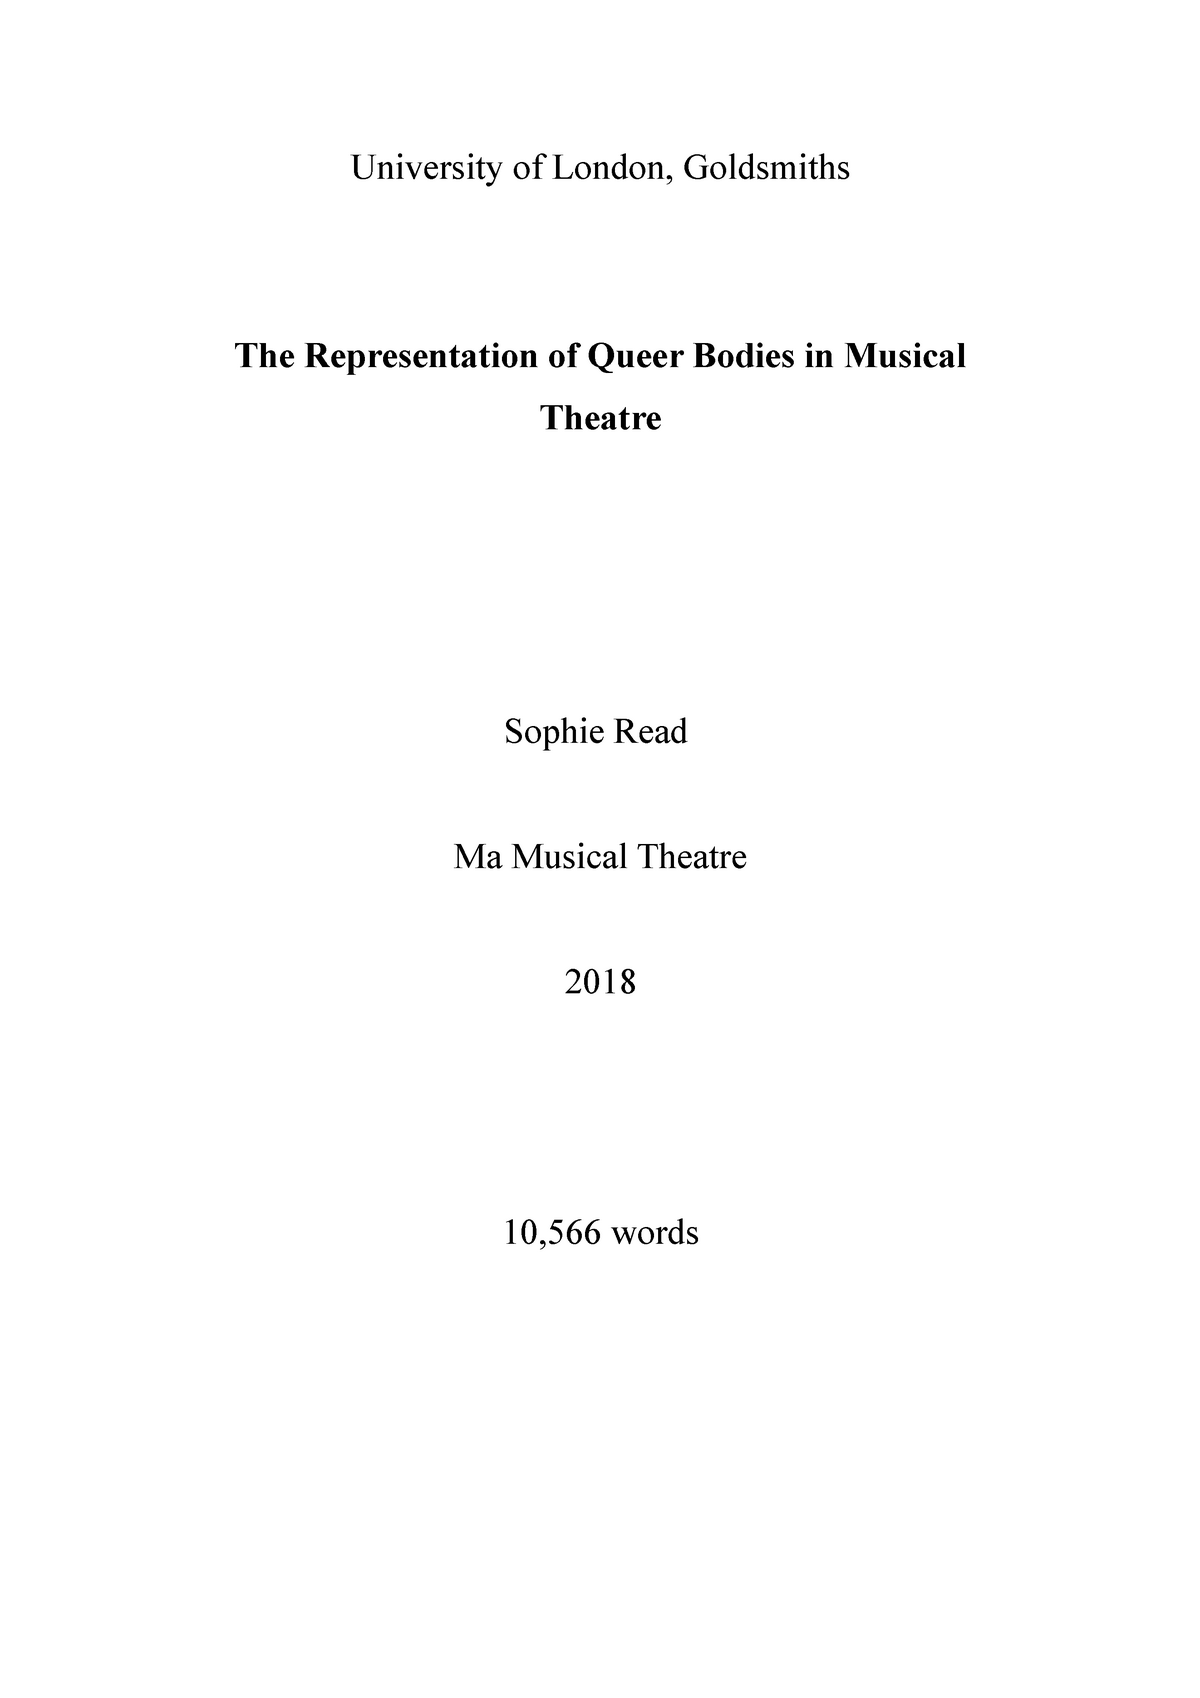 dissertation ideas for musical theatre